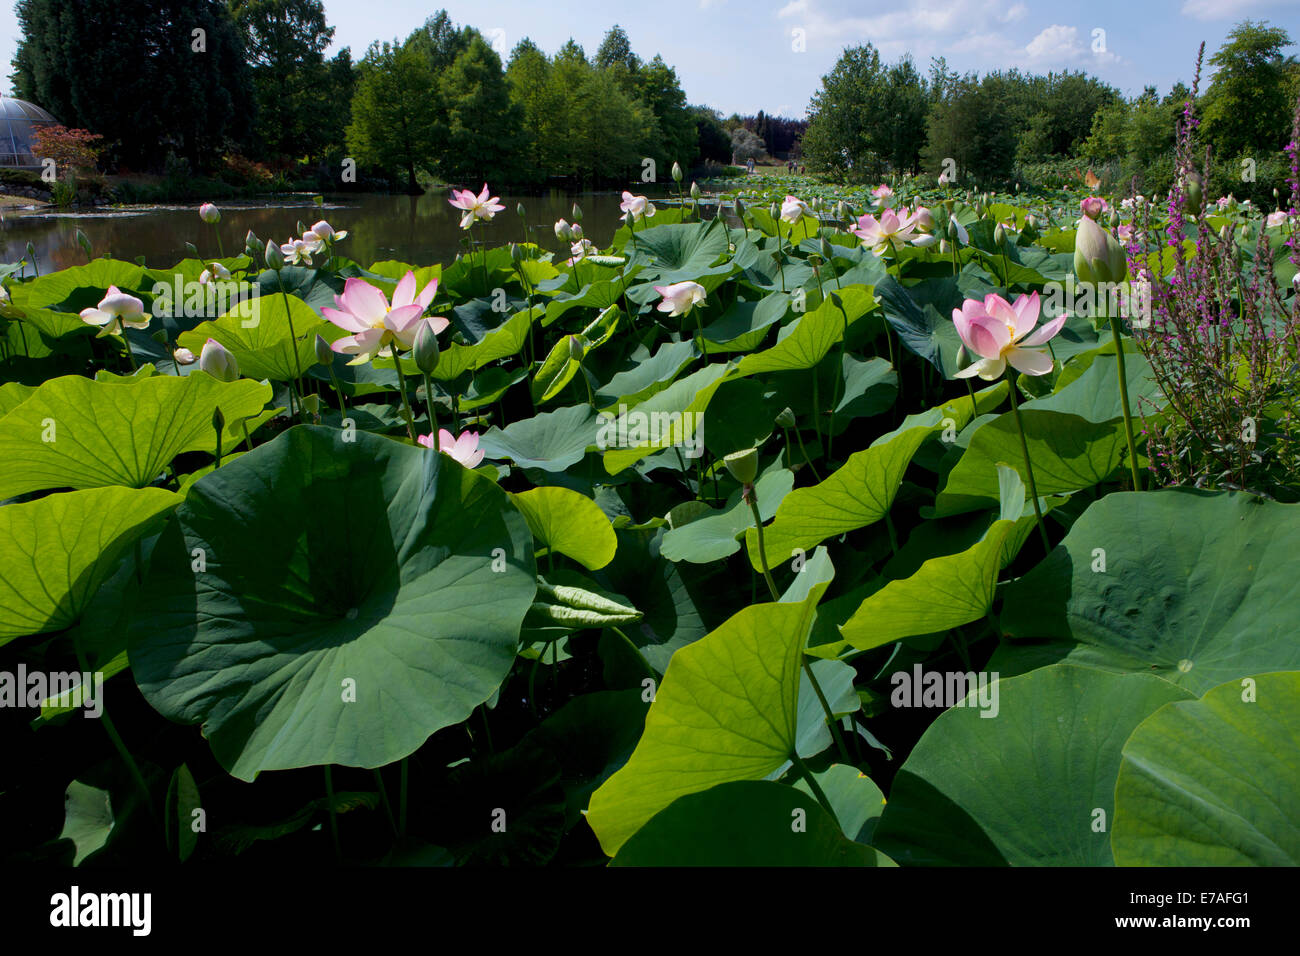 Indian fiori di loto (Nelumbo nucifera), Arboreto Baumpark Ellerhoop, Schleswig-Holstein, Germania Foto Stock